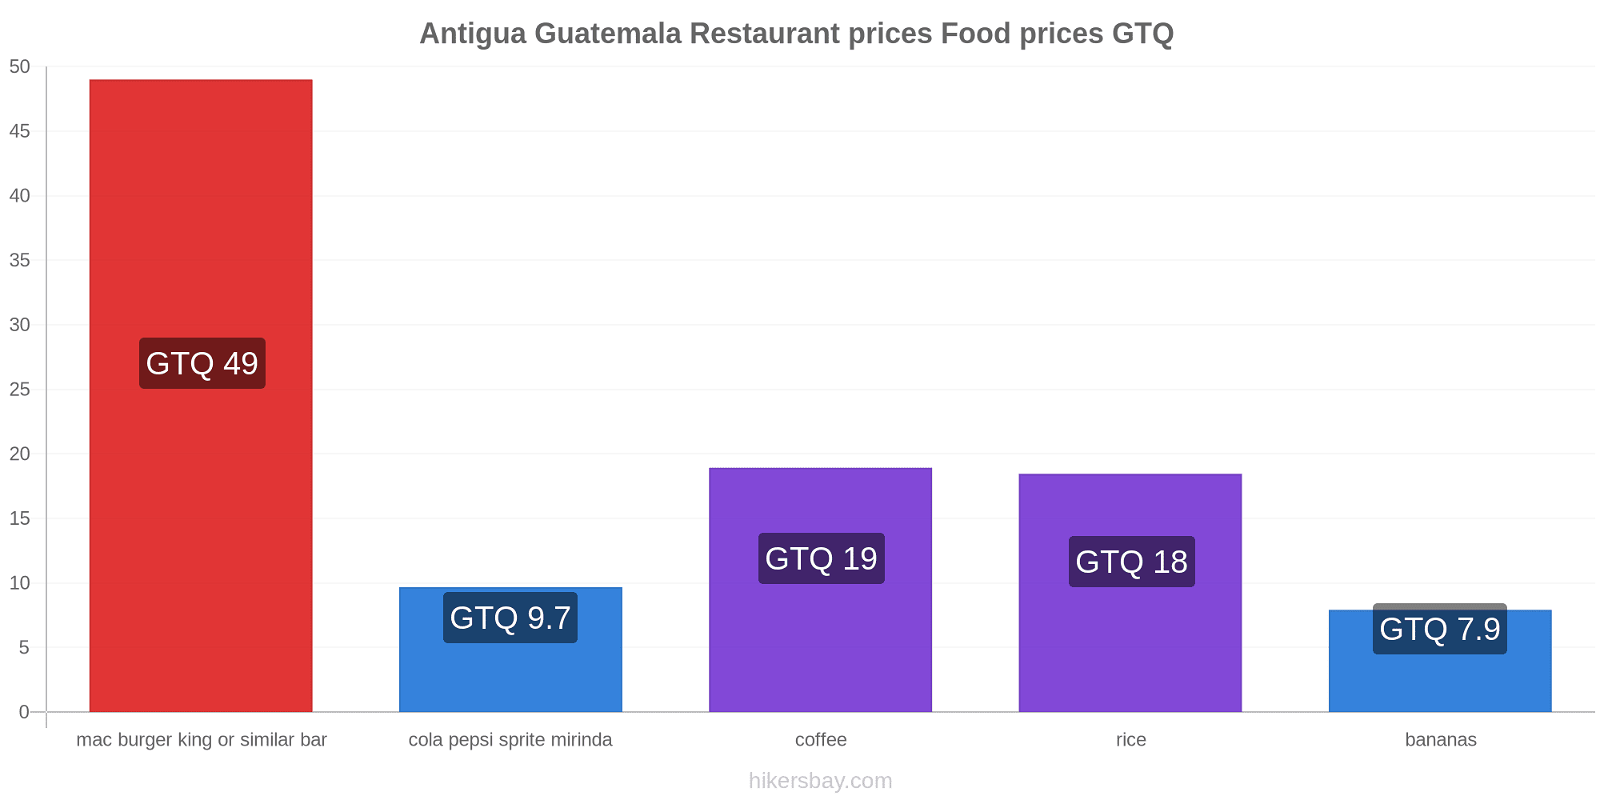 Antigua Guatemala price changes hikersbay.com